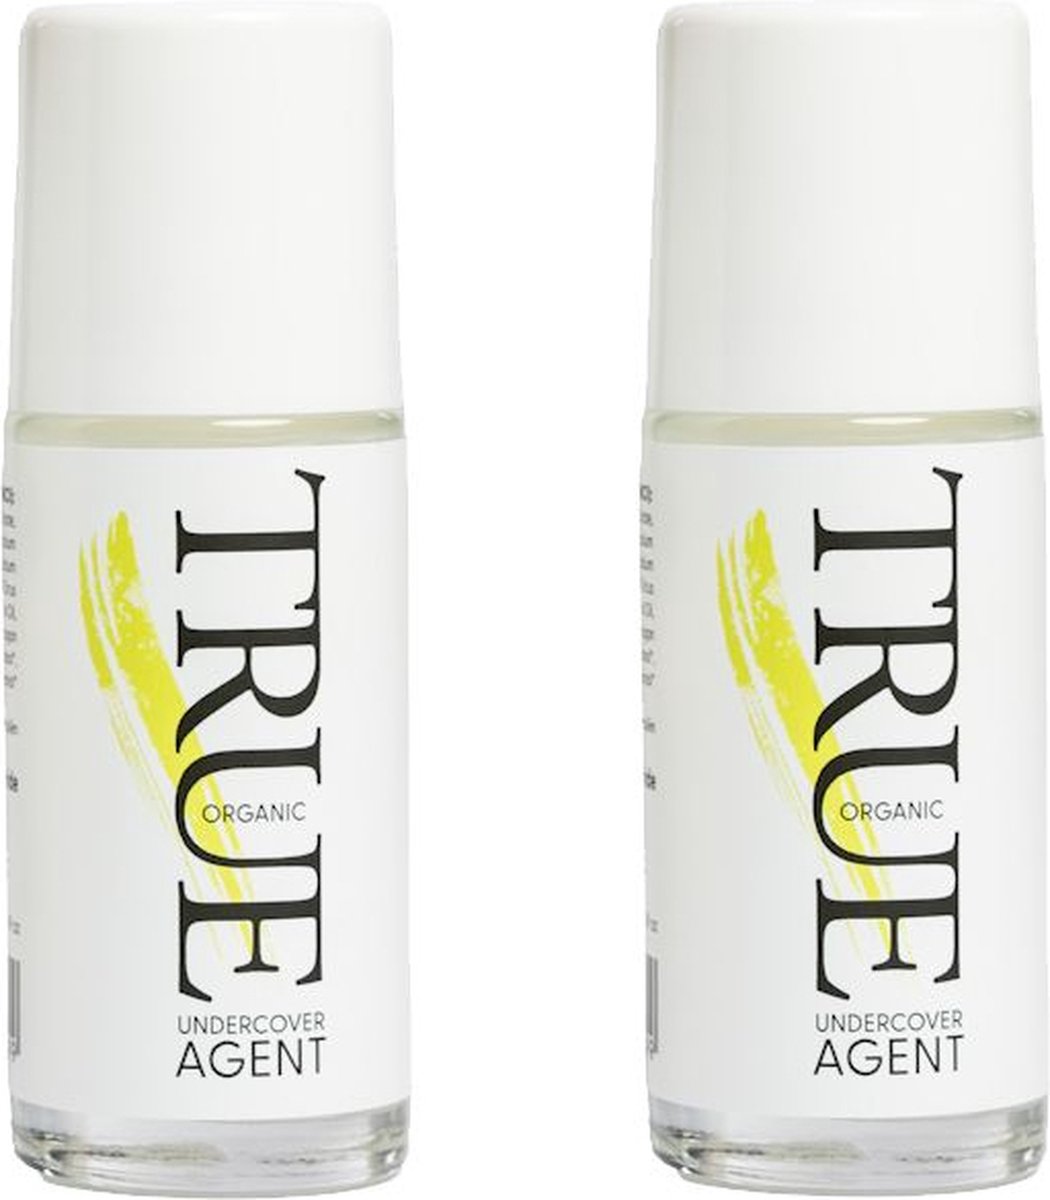 True Organic of Sweden - Undercover Agent - Roll on Deodorant - Lemongrass - 50ml - 2 Pak